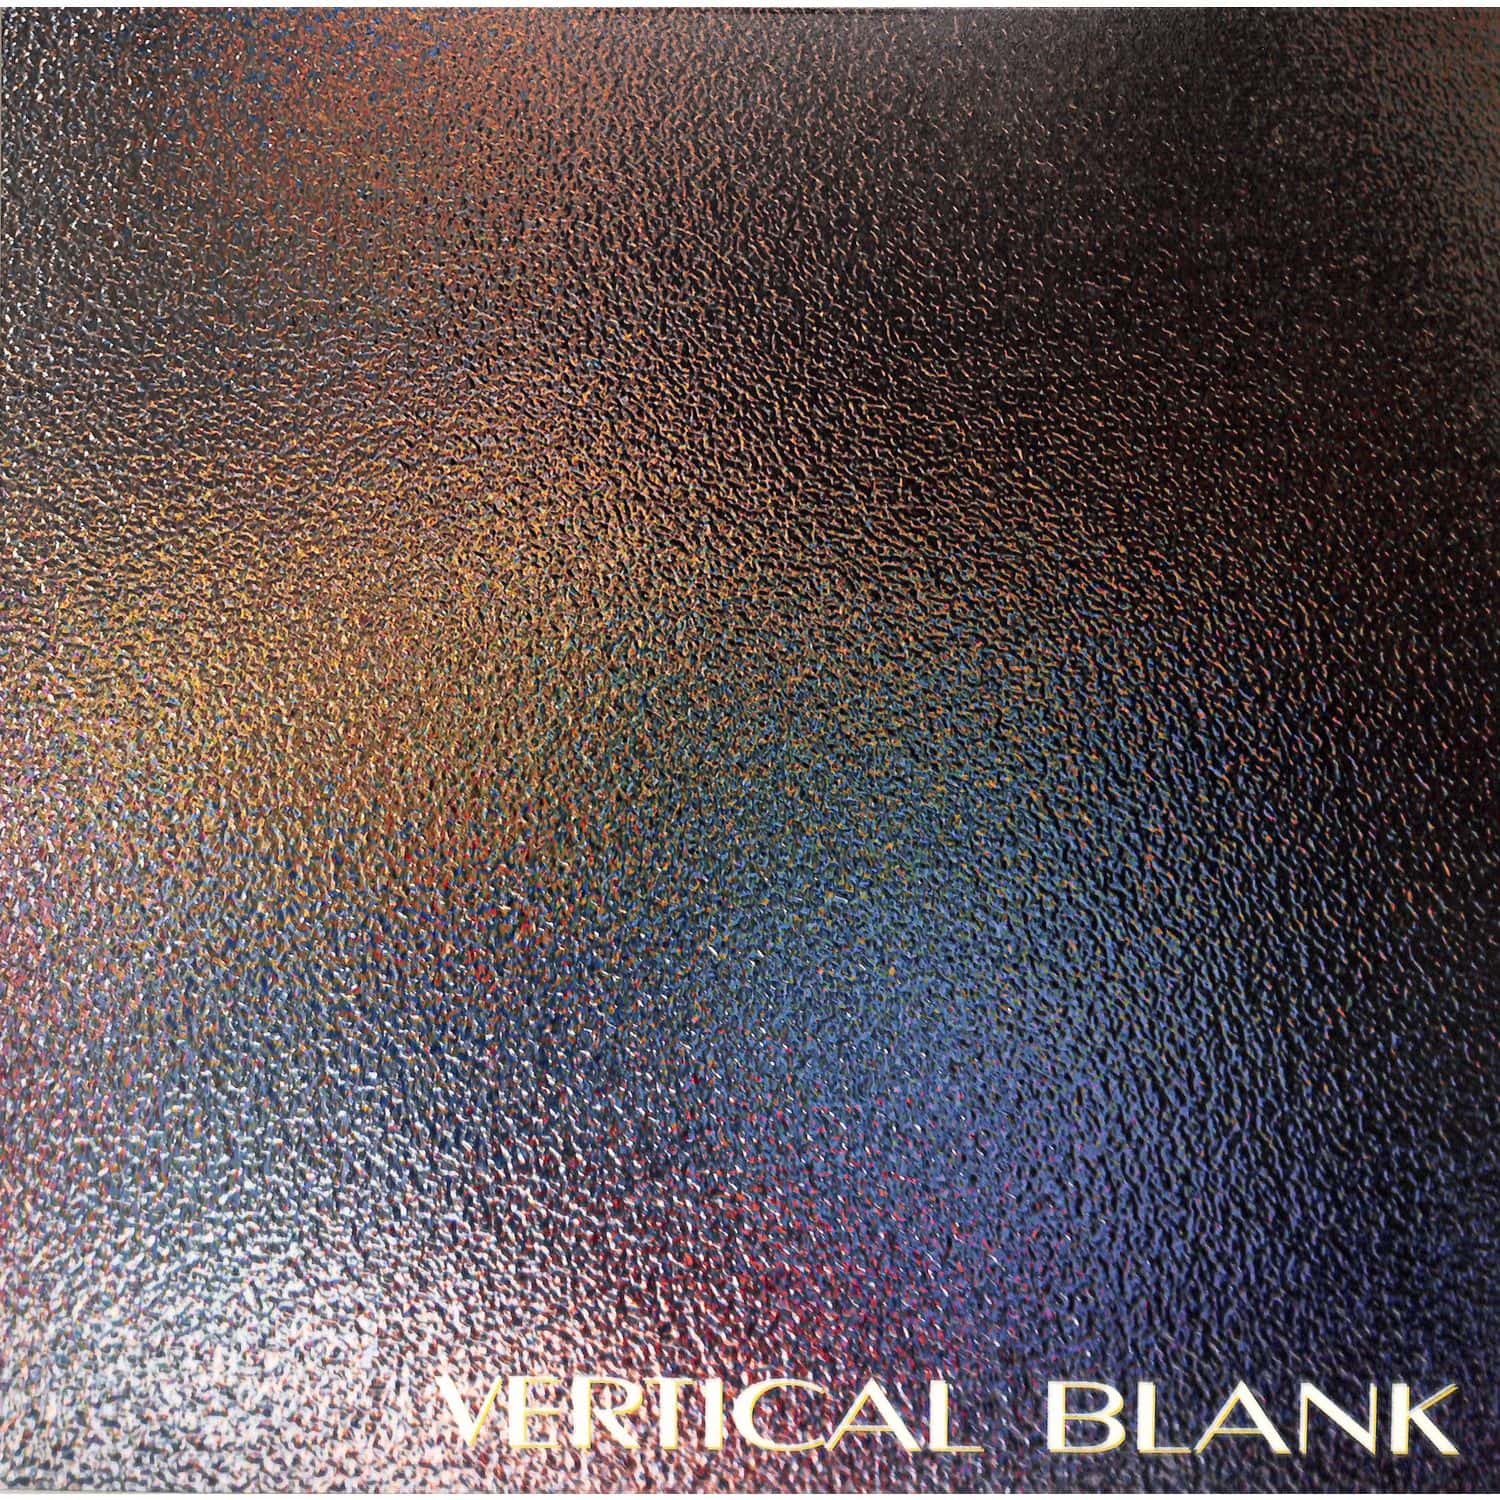 Vertical Blank - NO REASON